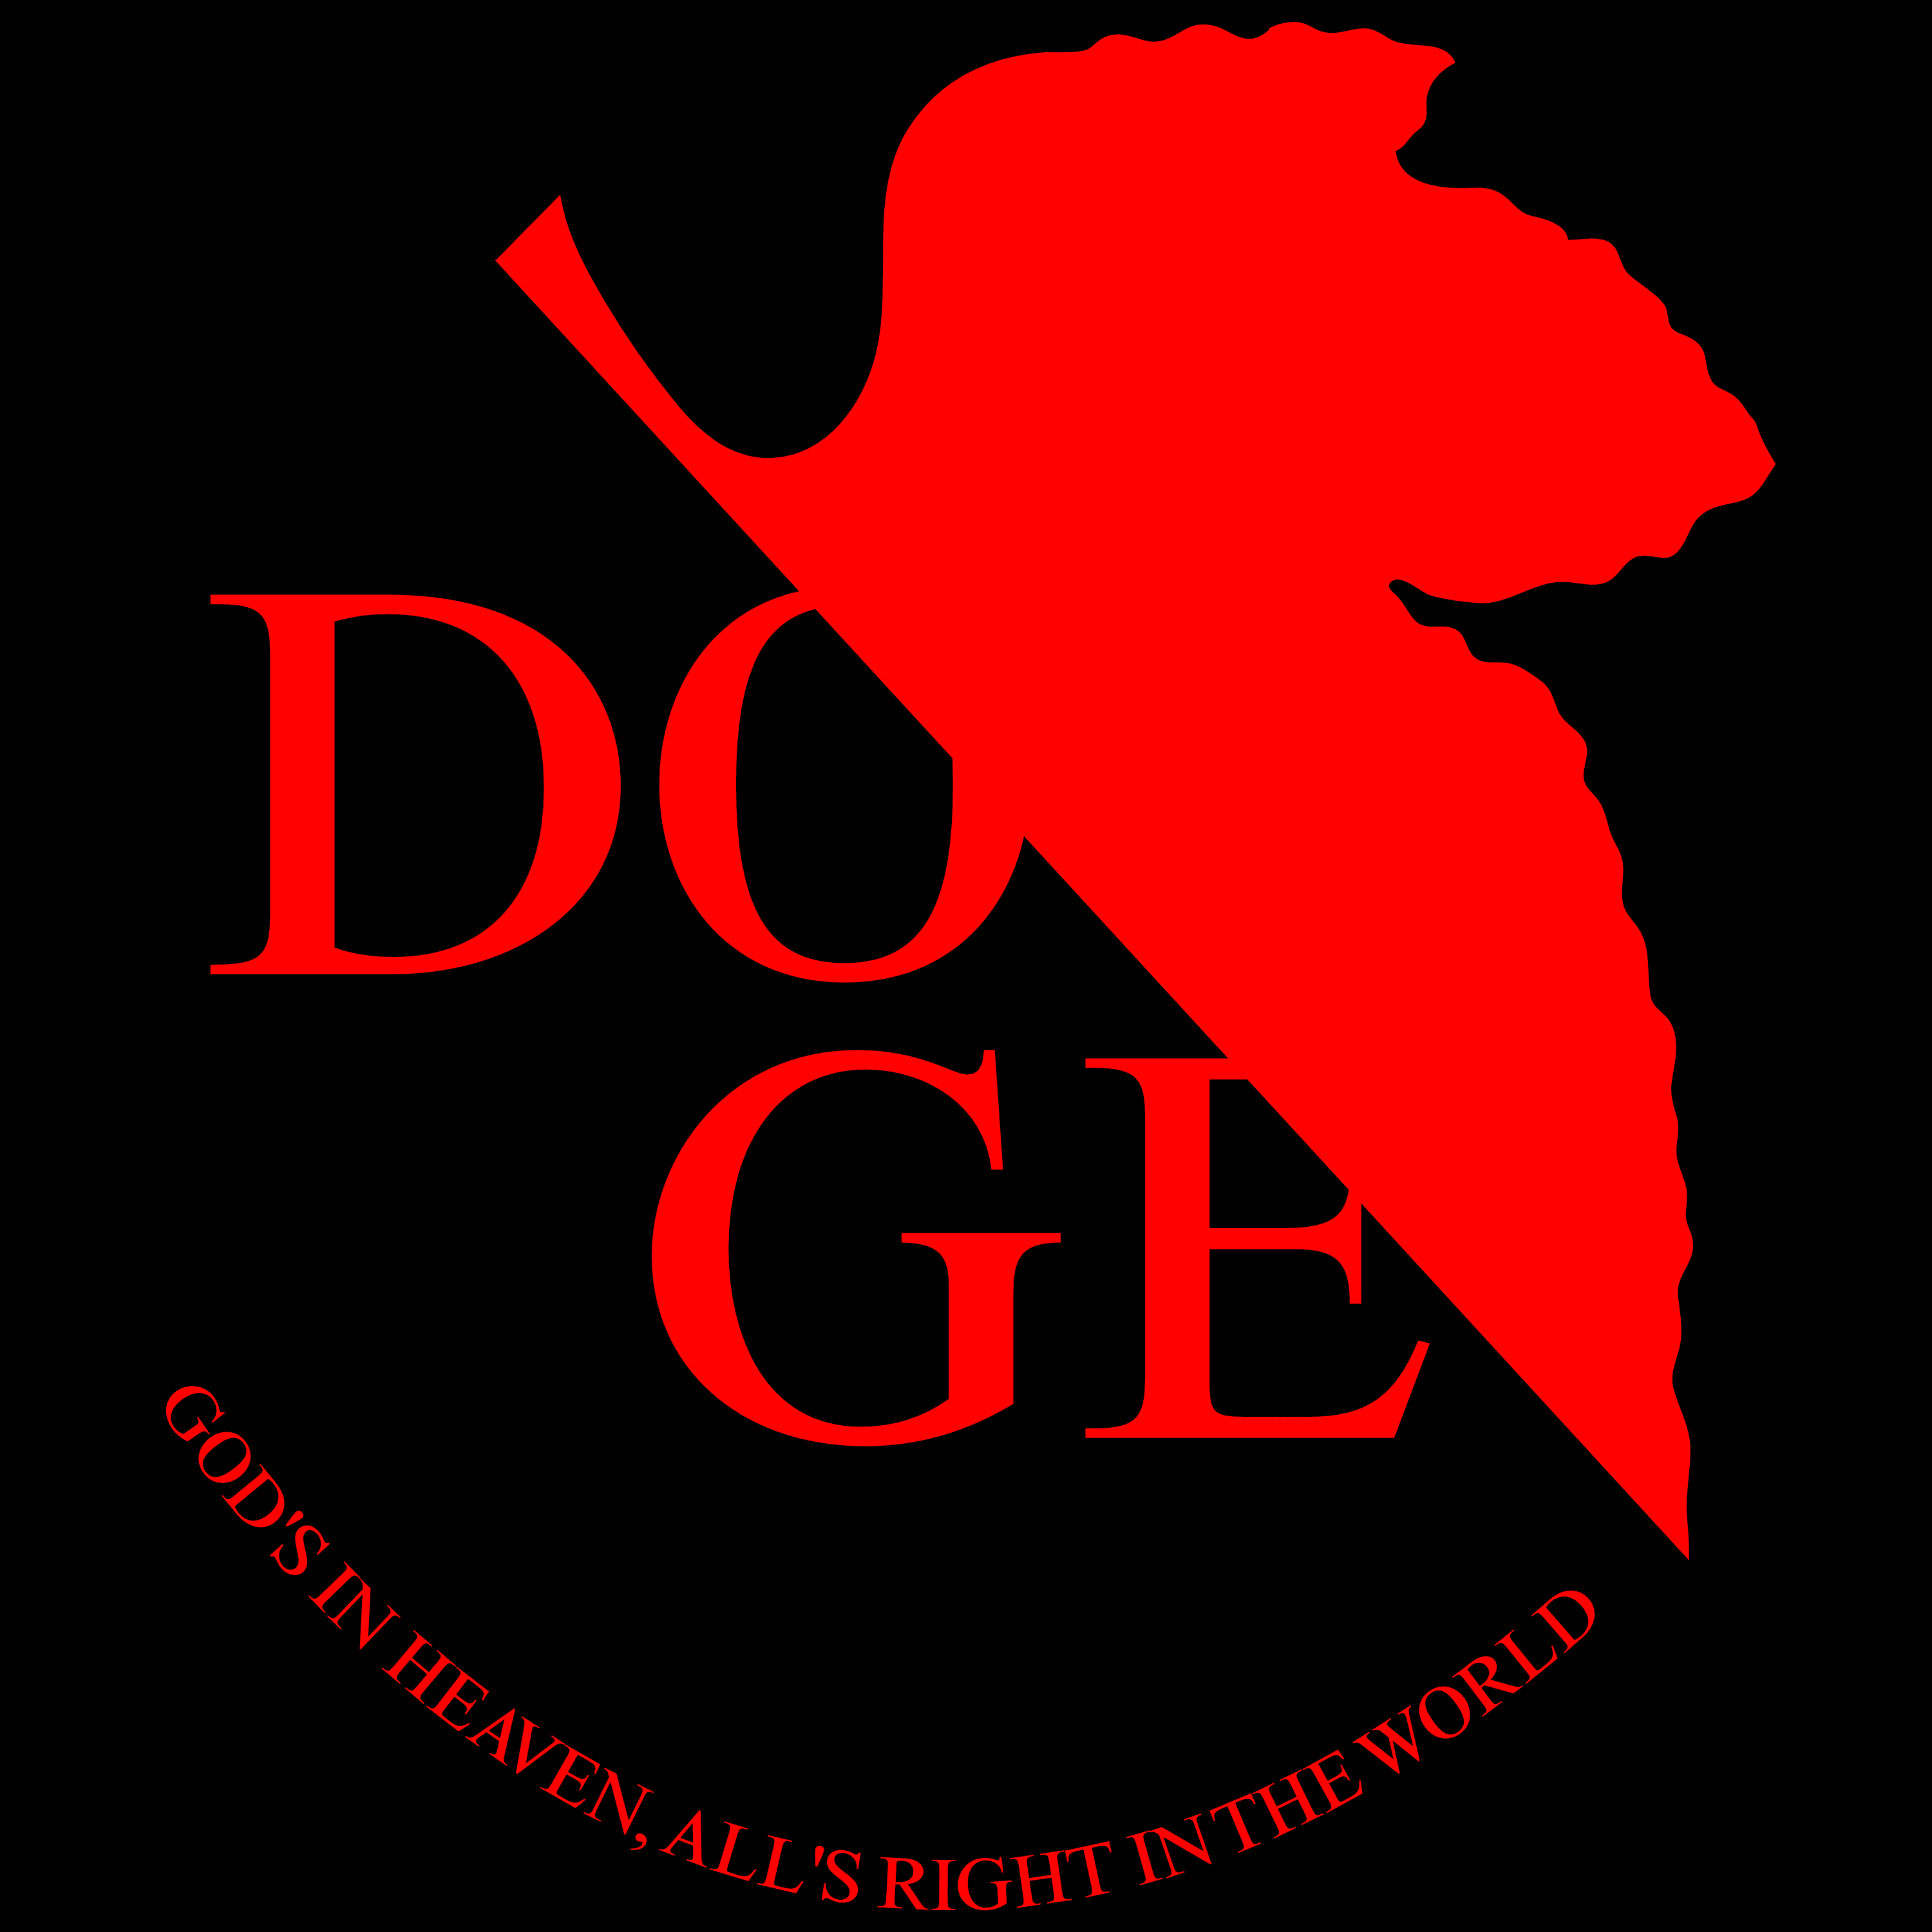 DOGE Genesis Evangelion